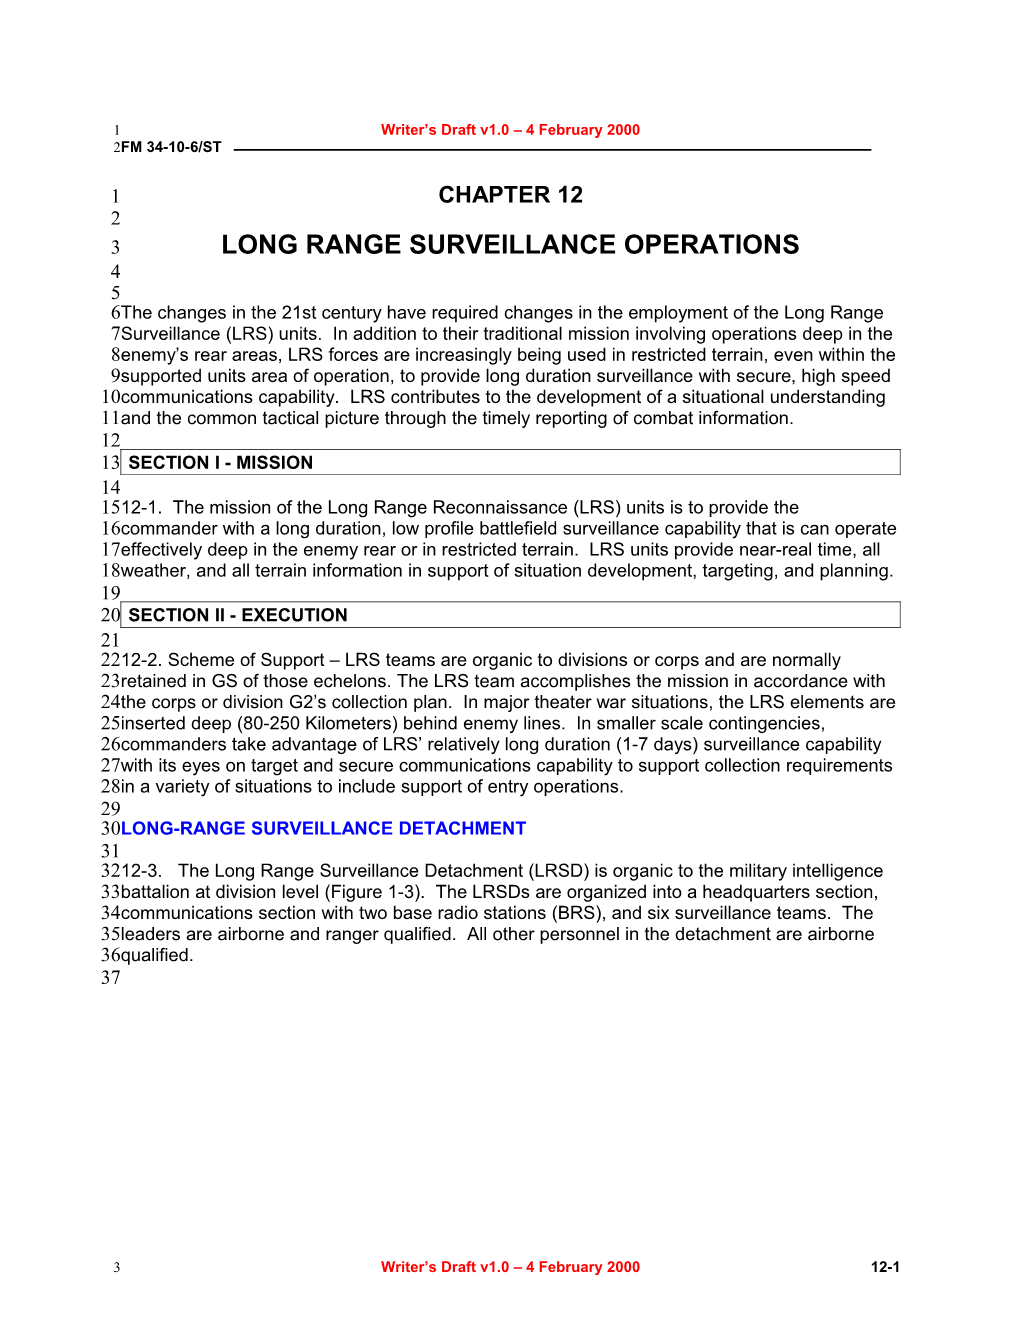 Long Range Surveillance Operations